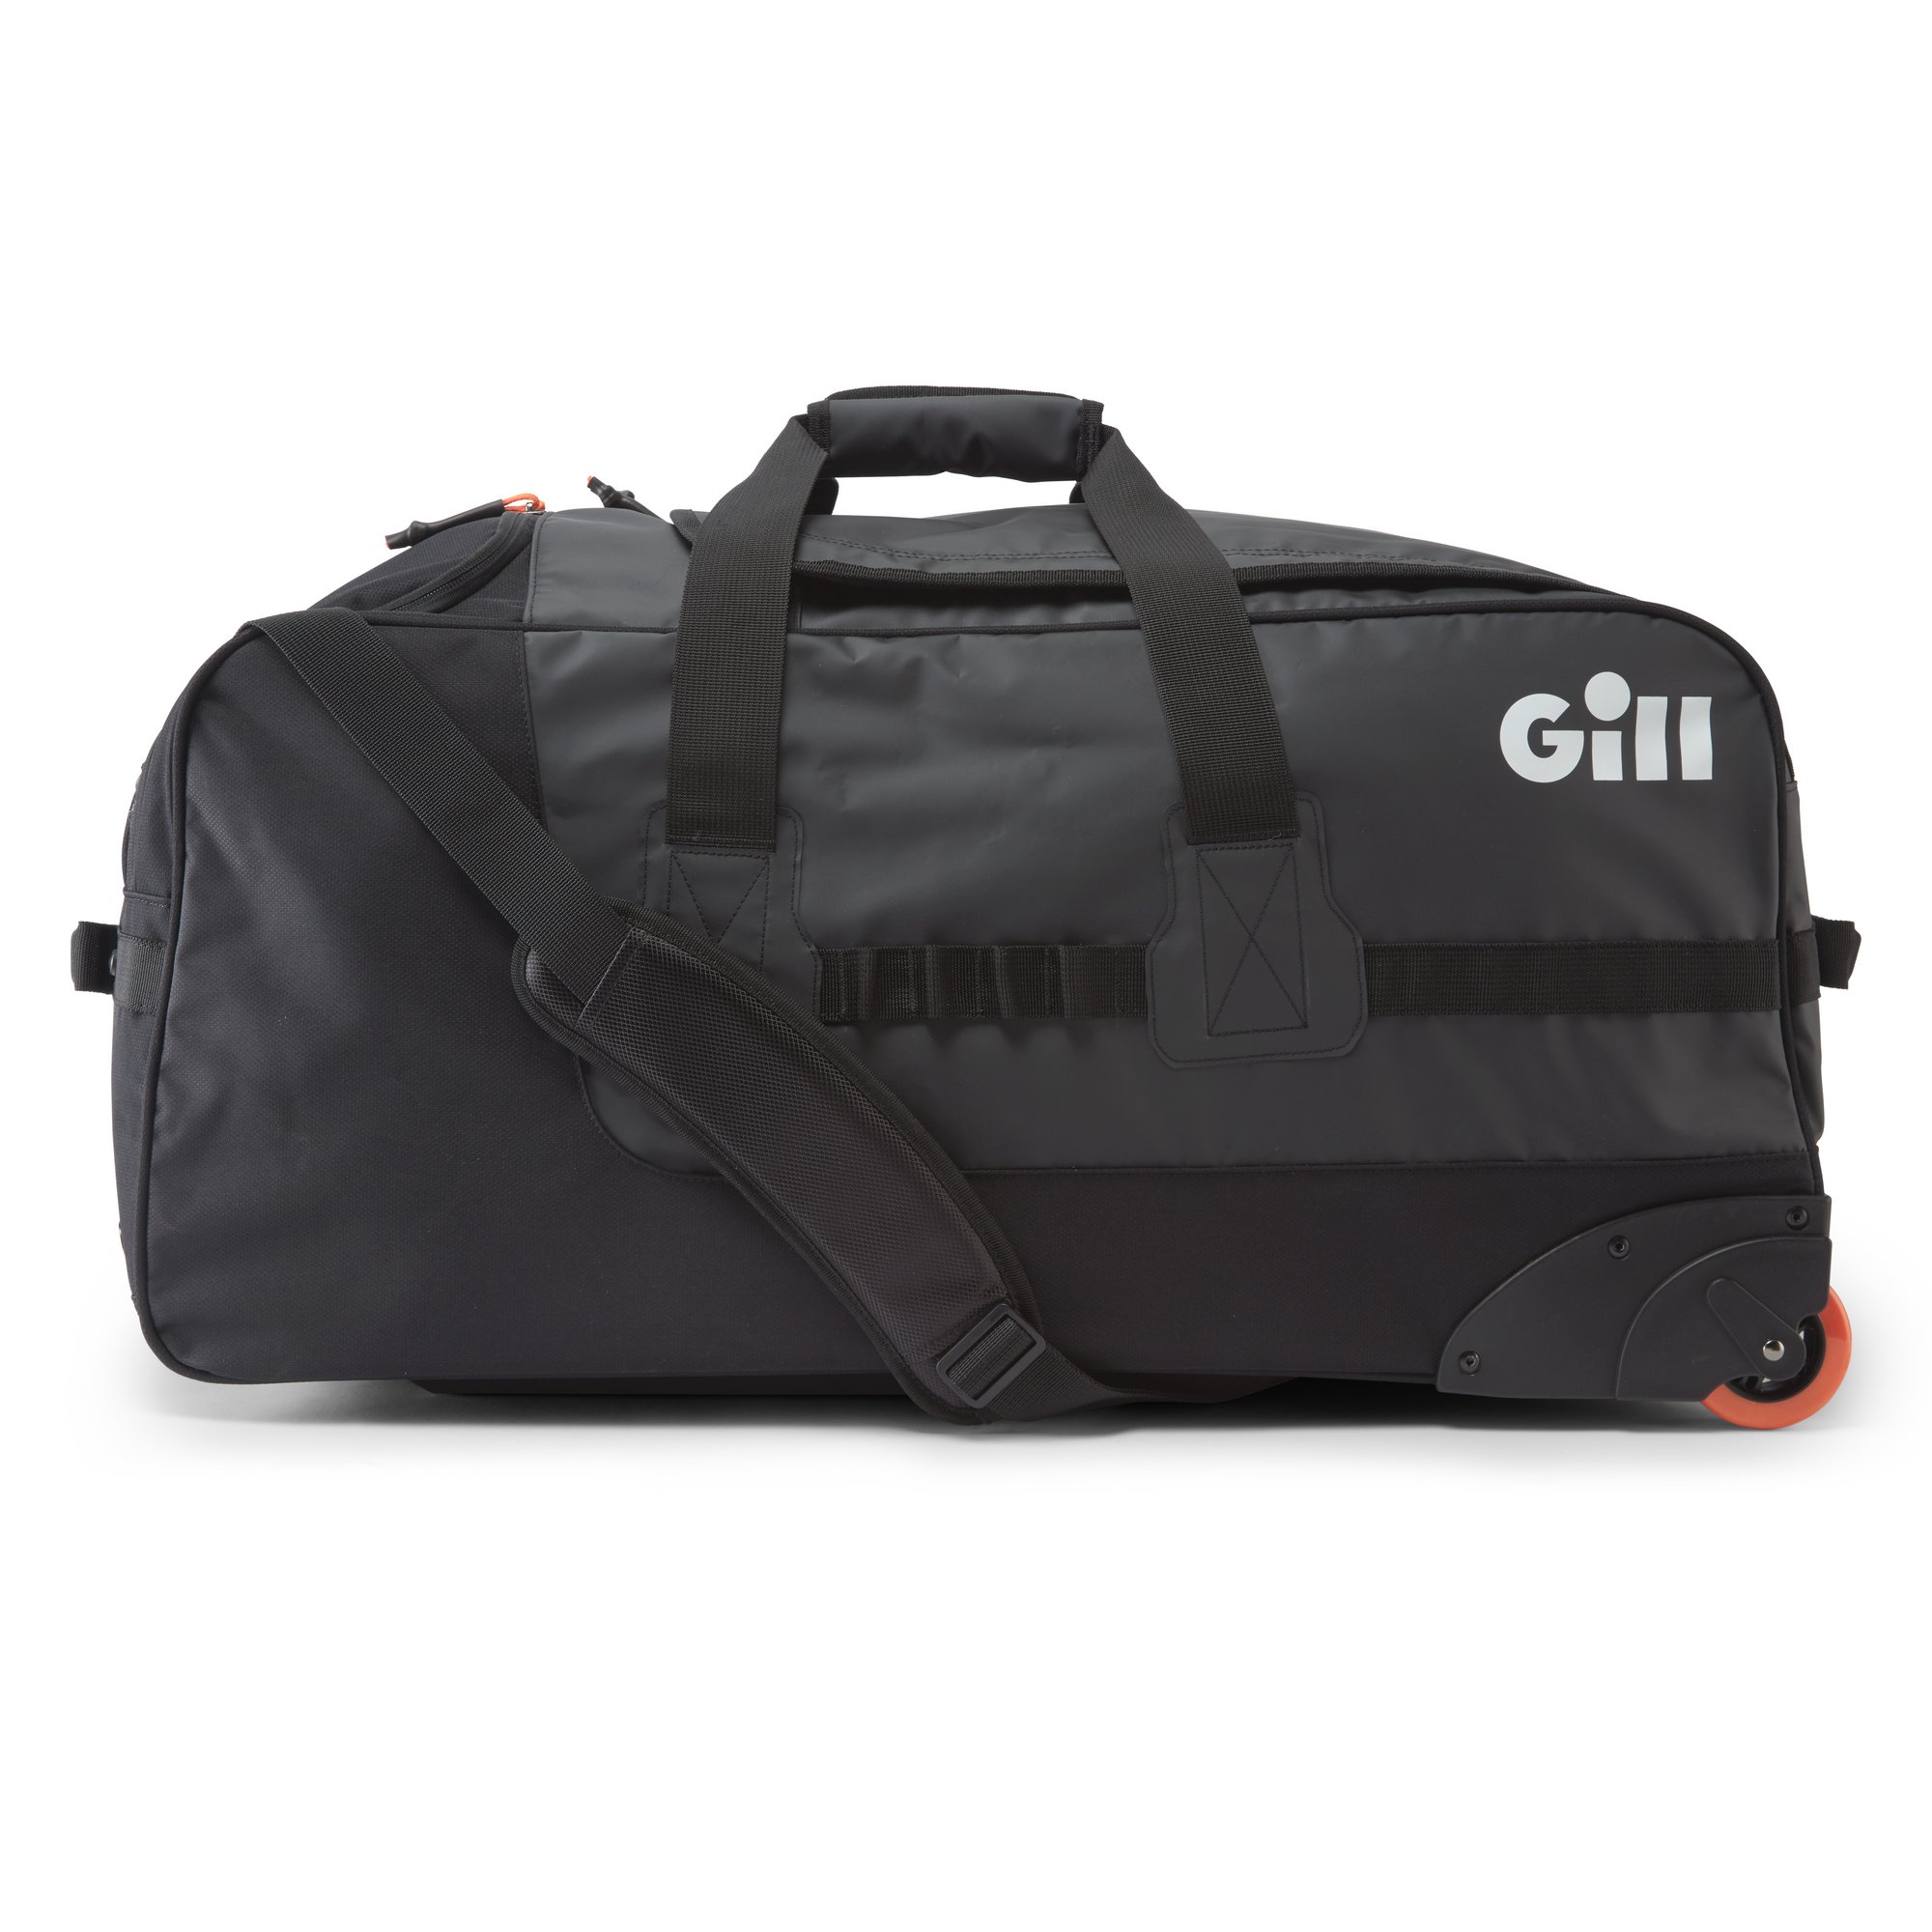 Gill Rolling Cargo Bag